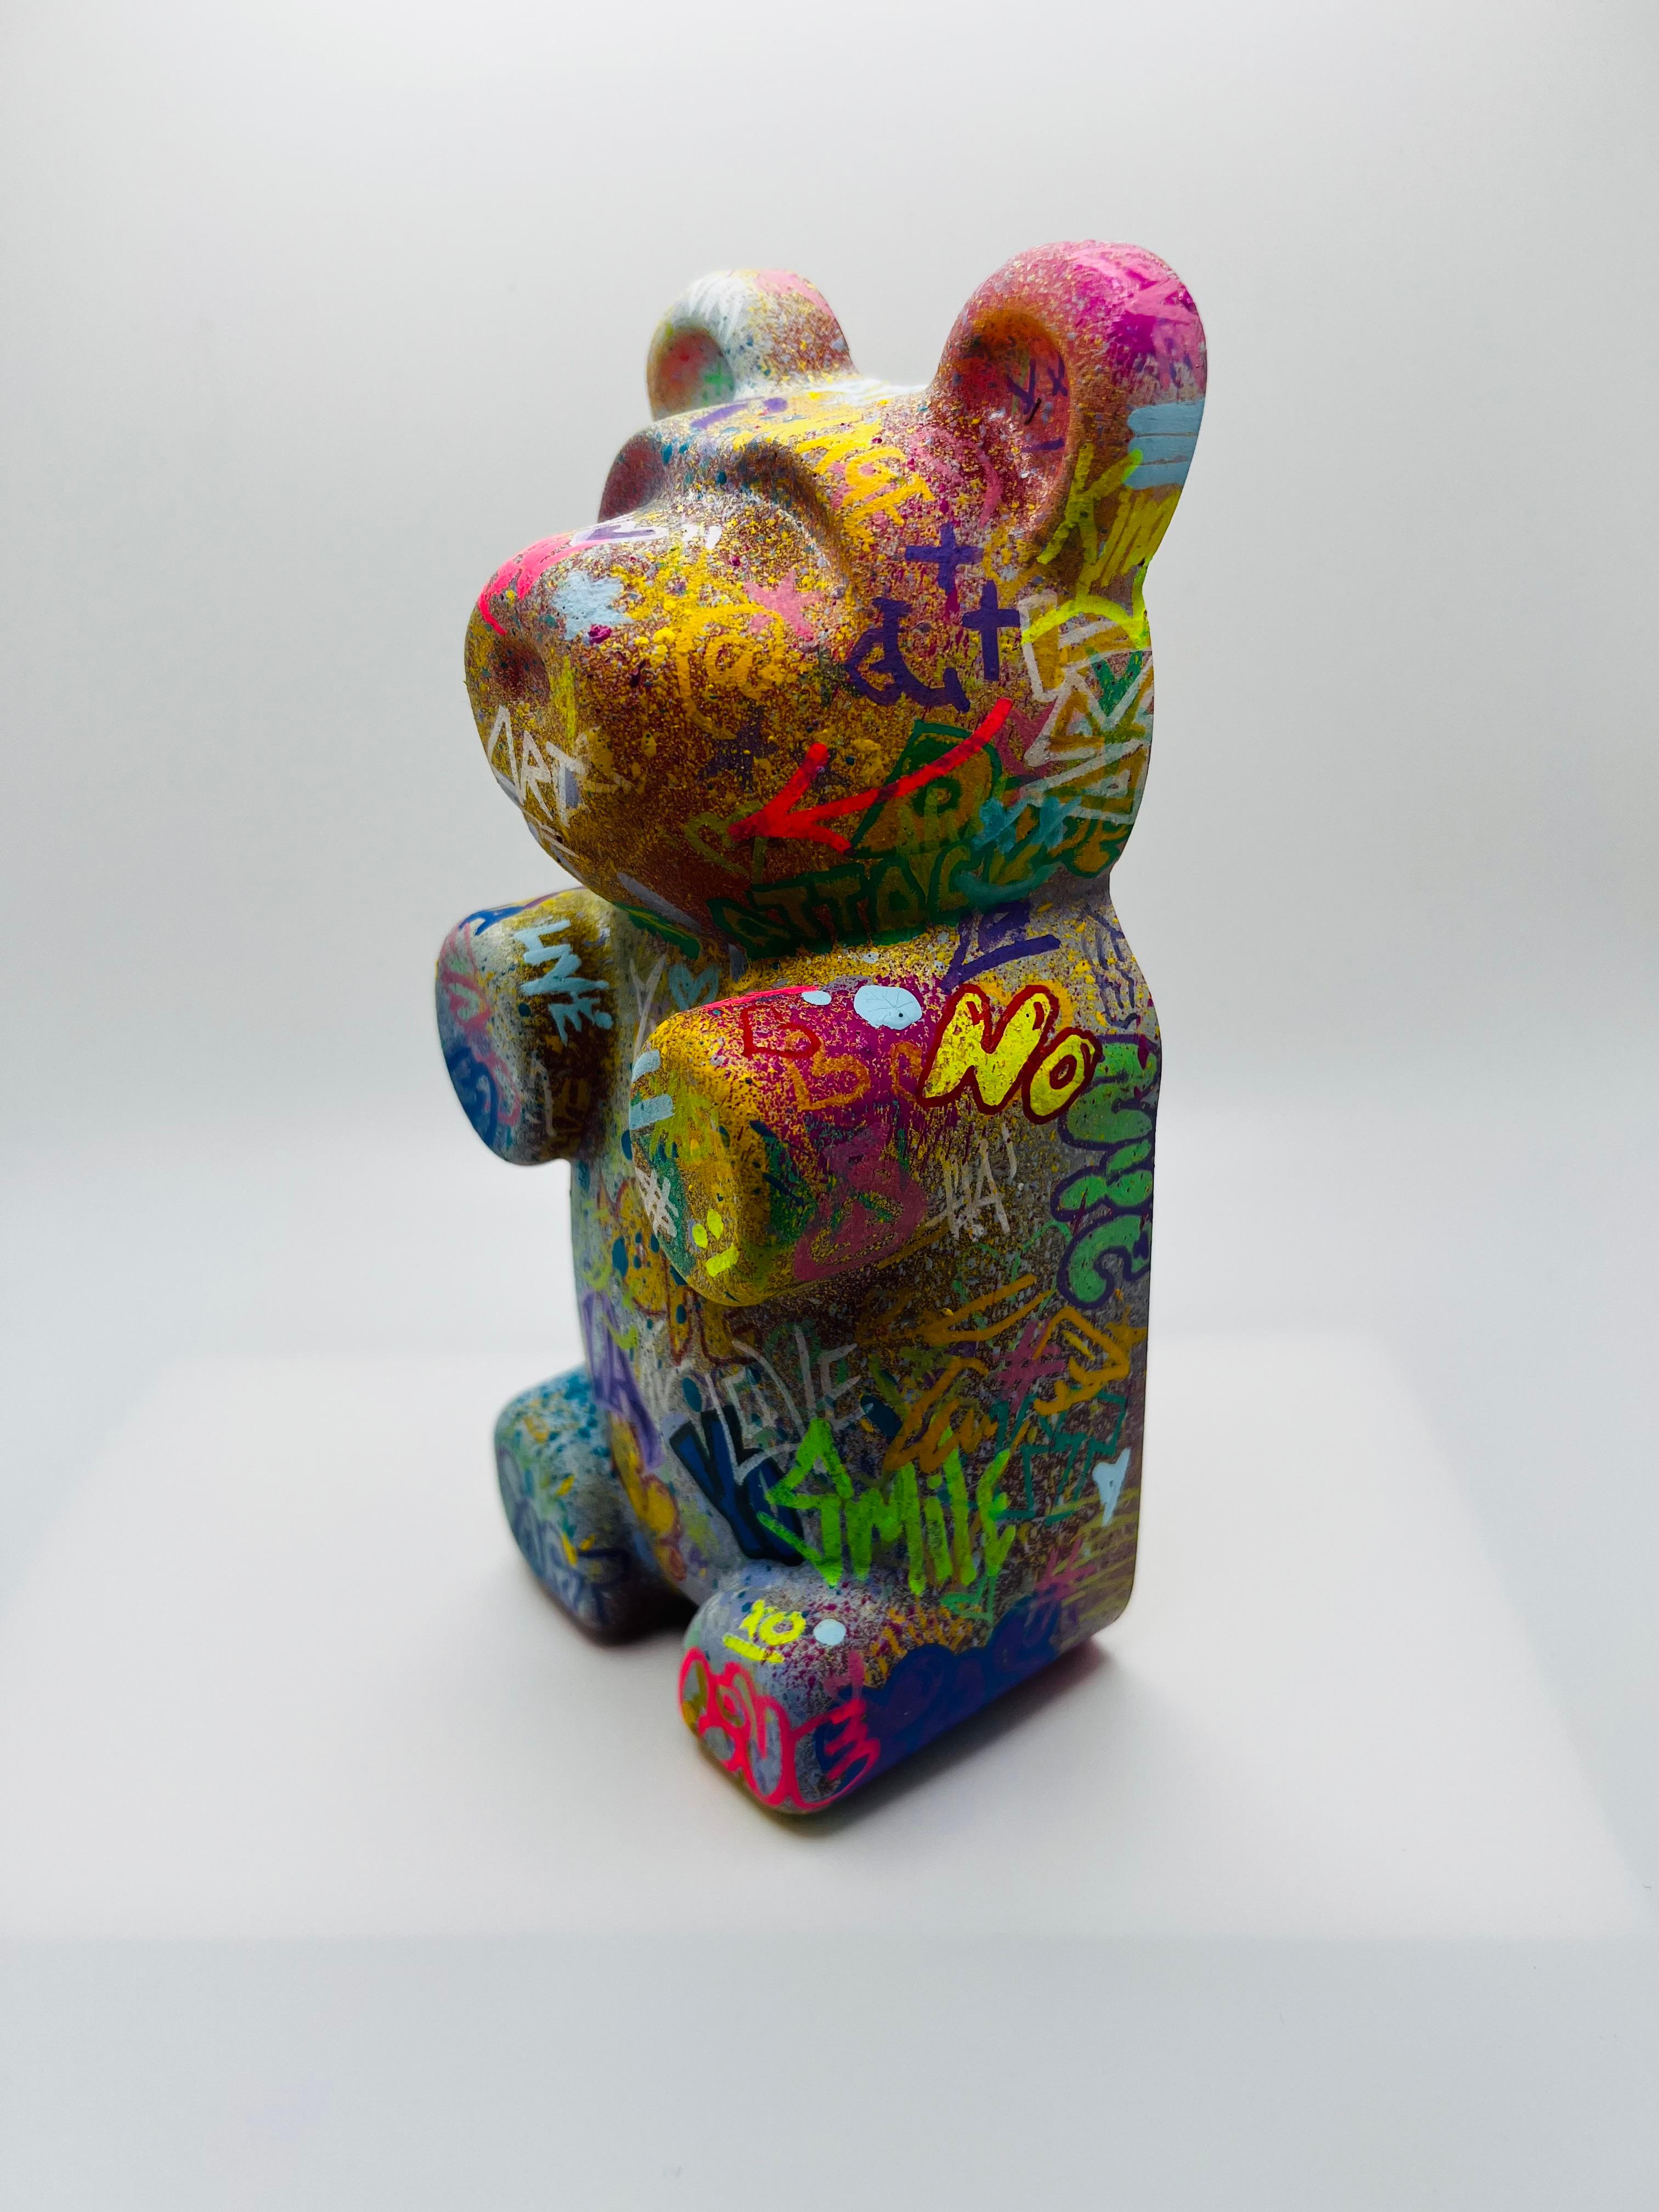 Graffiti Gummy bear 2, street art, pop art, colorful, contemporary, sculpture - Mixed Media Art by Sahara Novotny